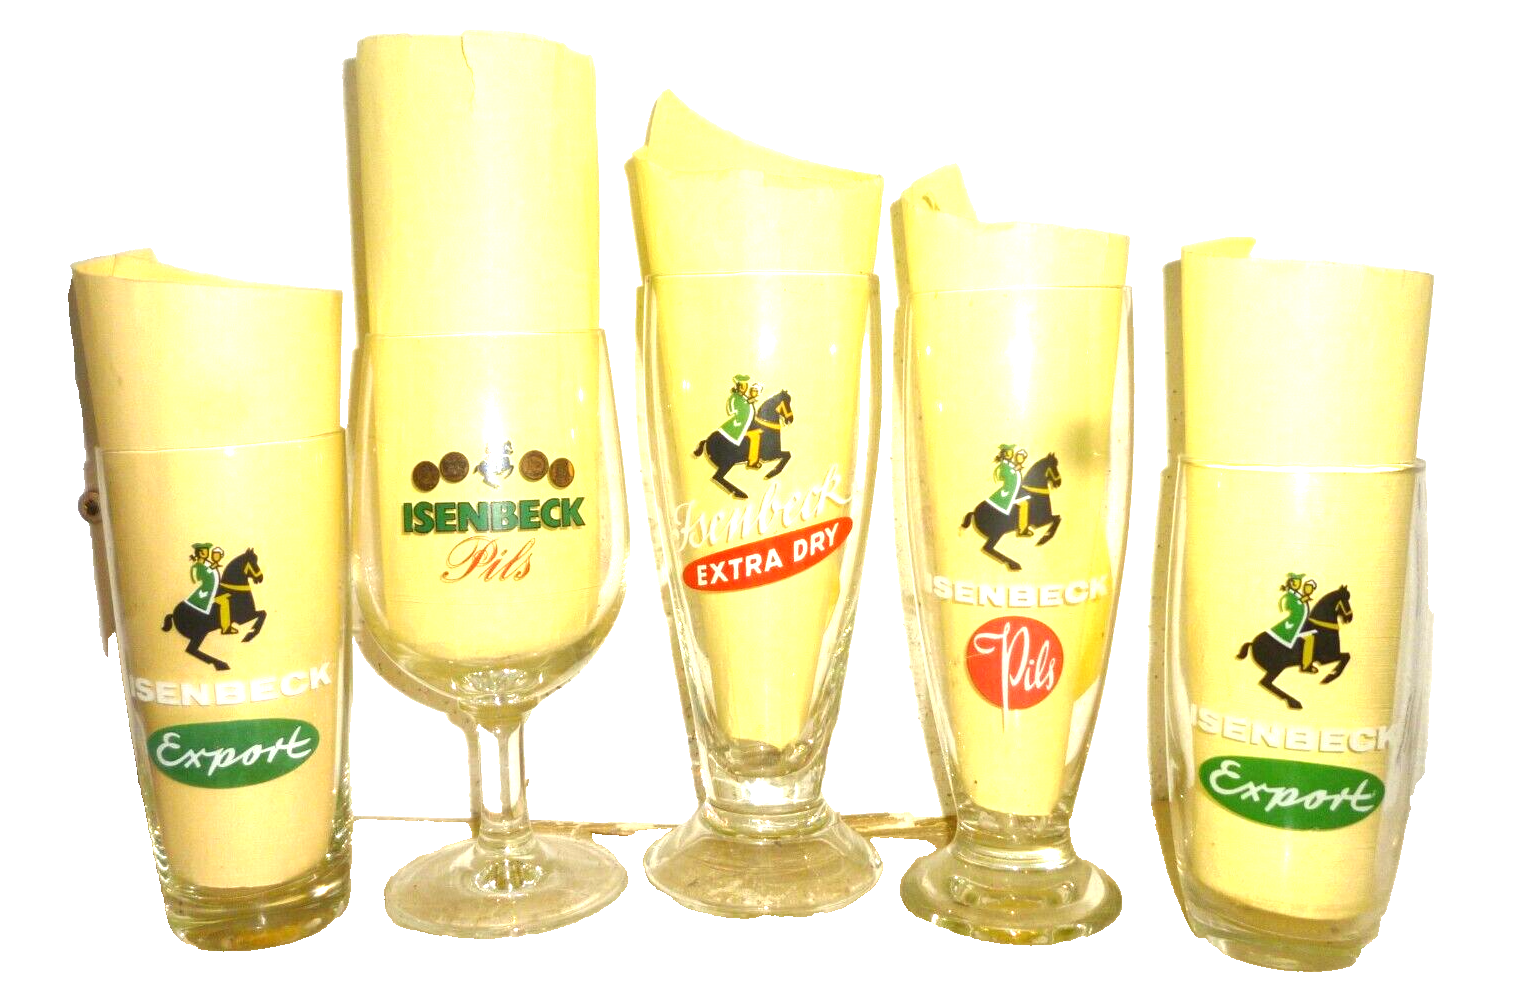 5 Isenbeck +1990 Hamm Pils & Export German Beer Glasses - $24.95